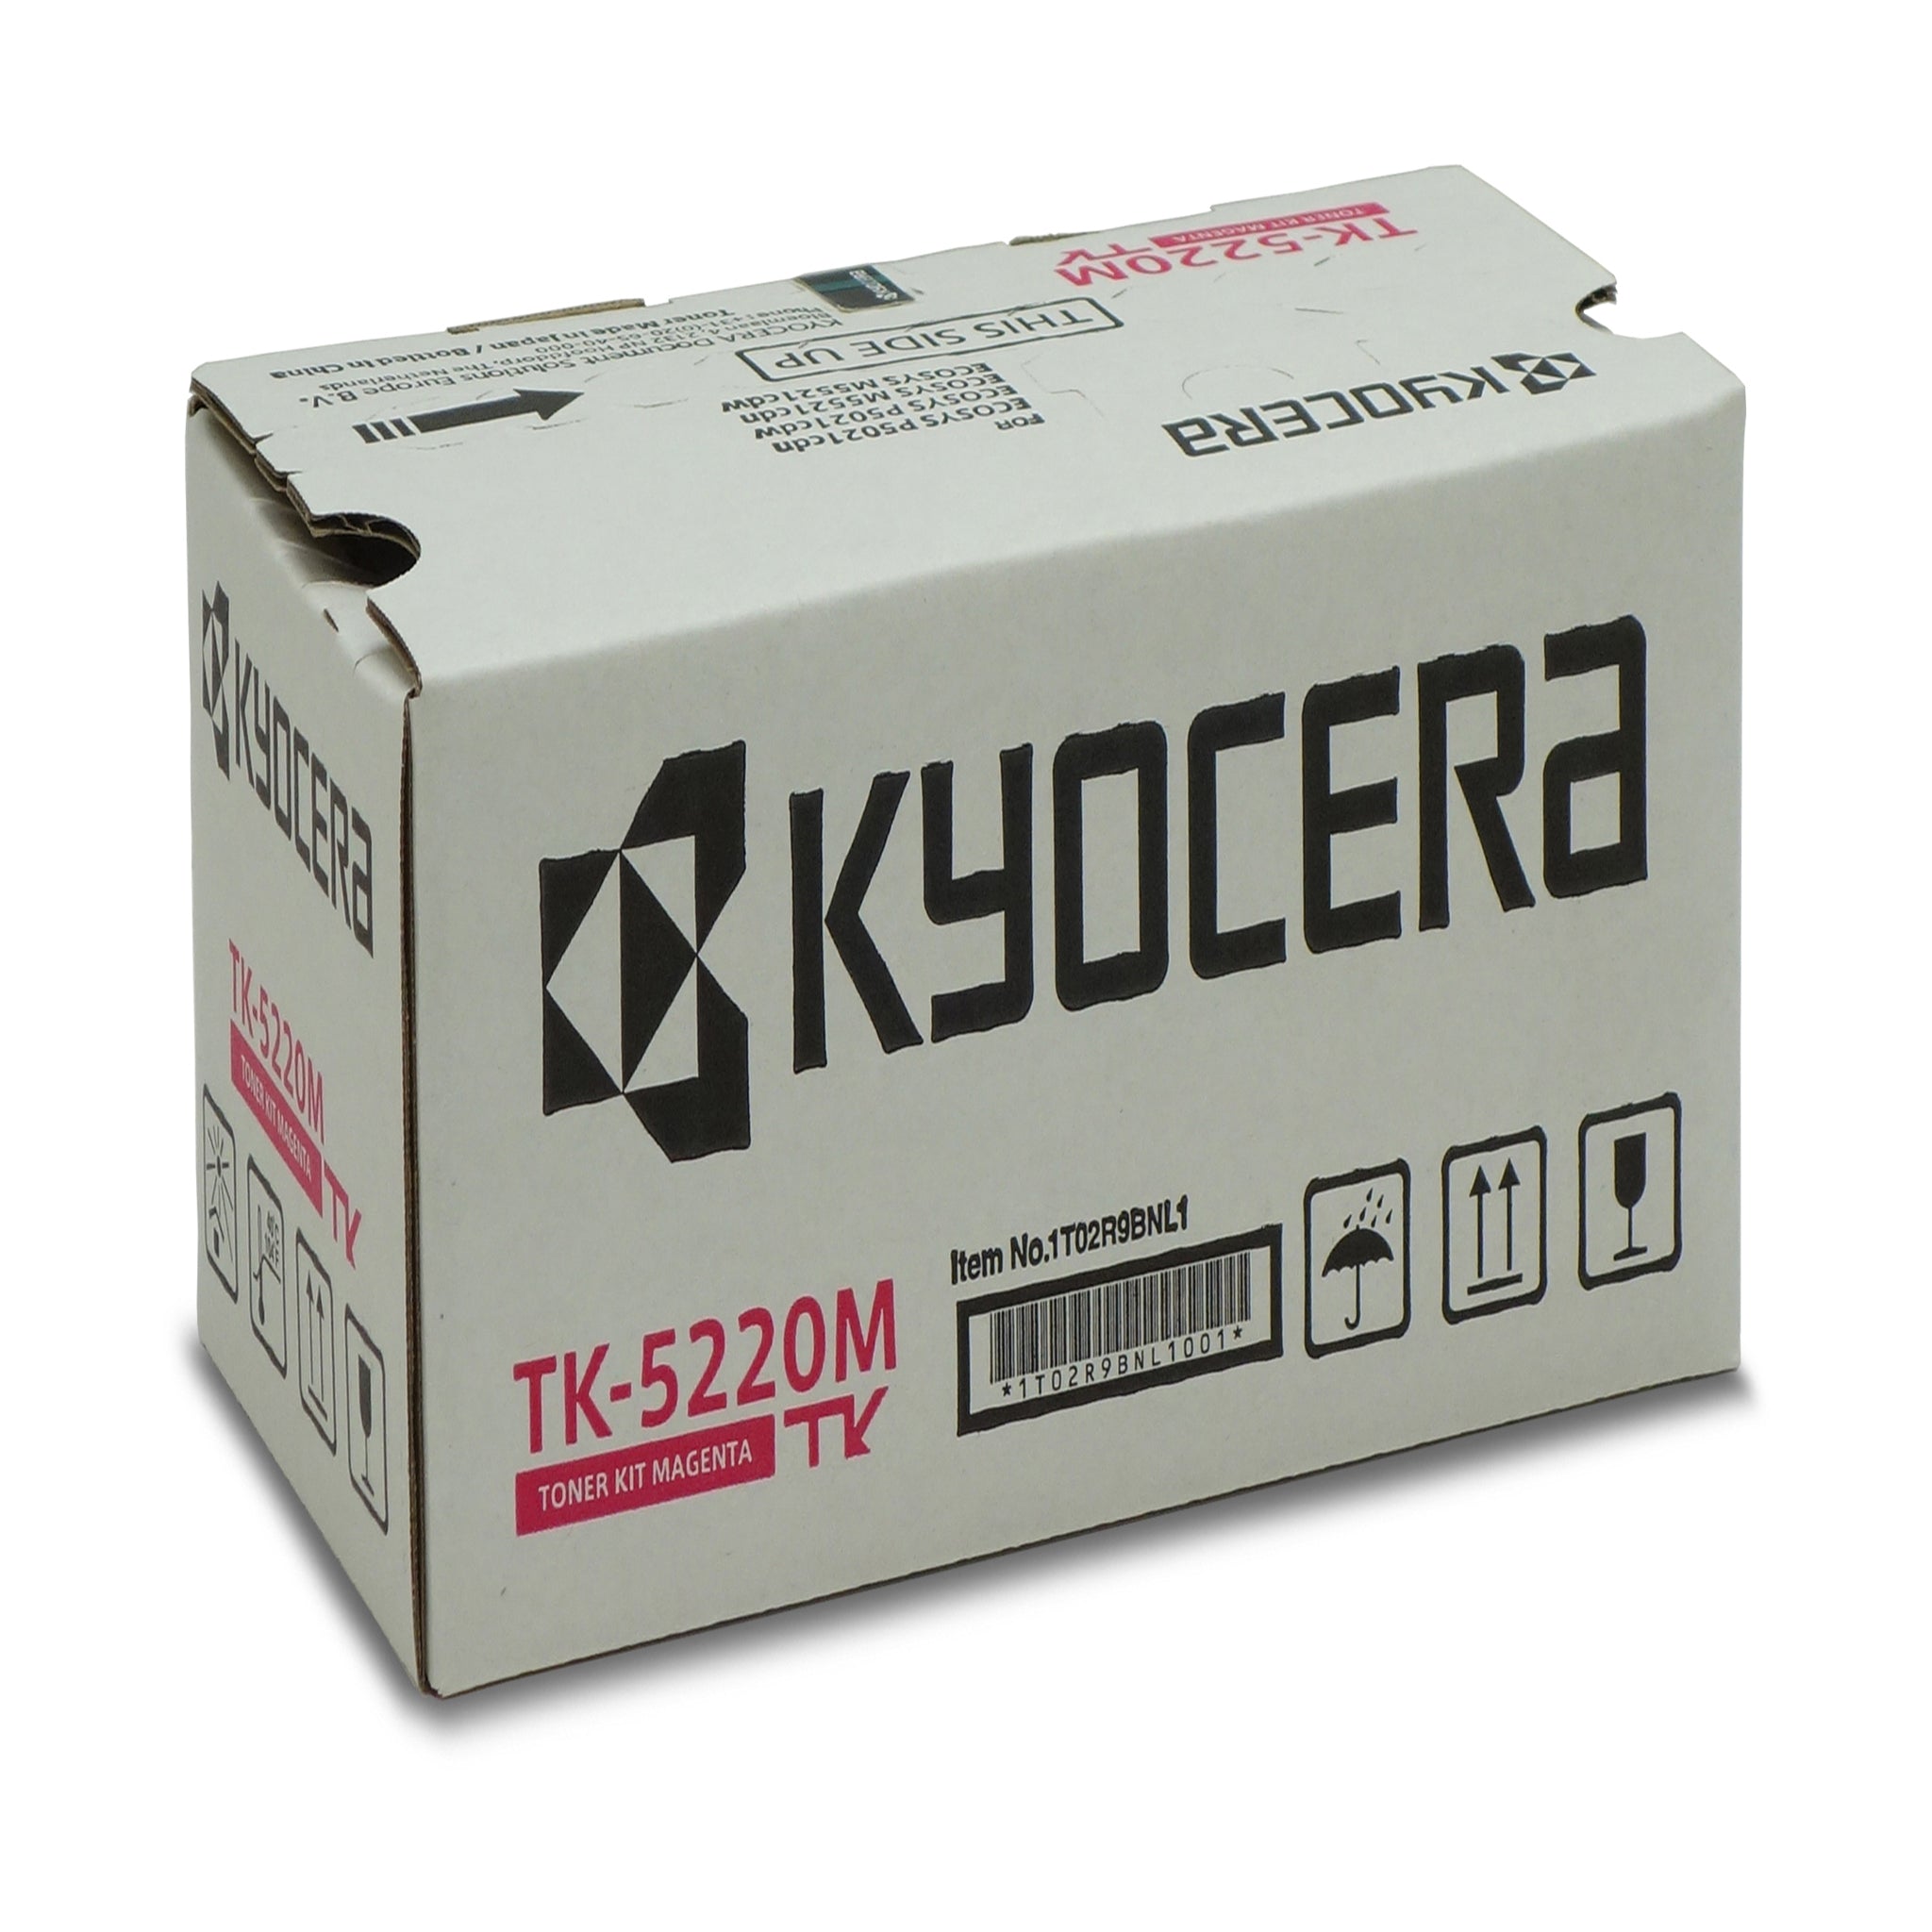 Toner cartridge original for Kyocera TK-5220